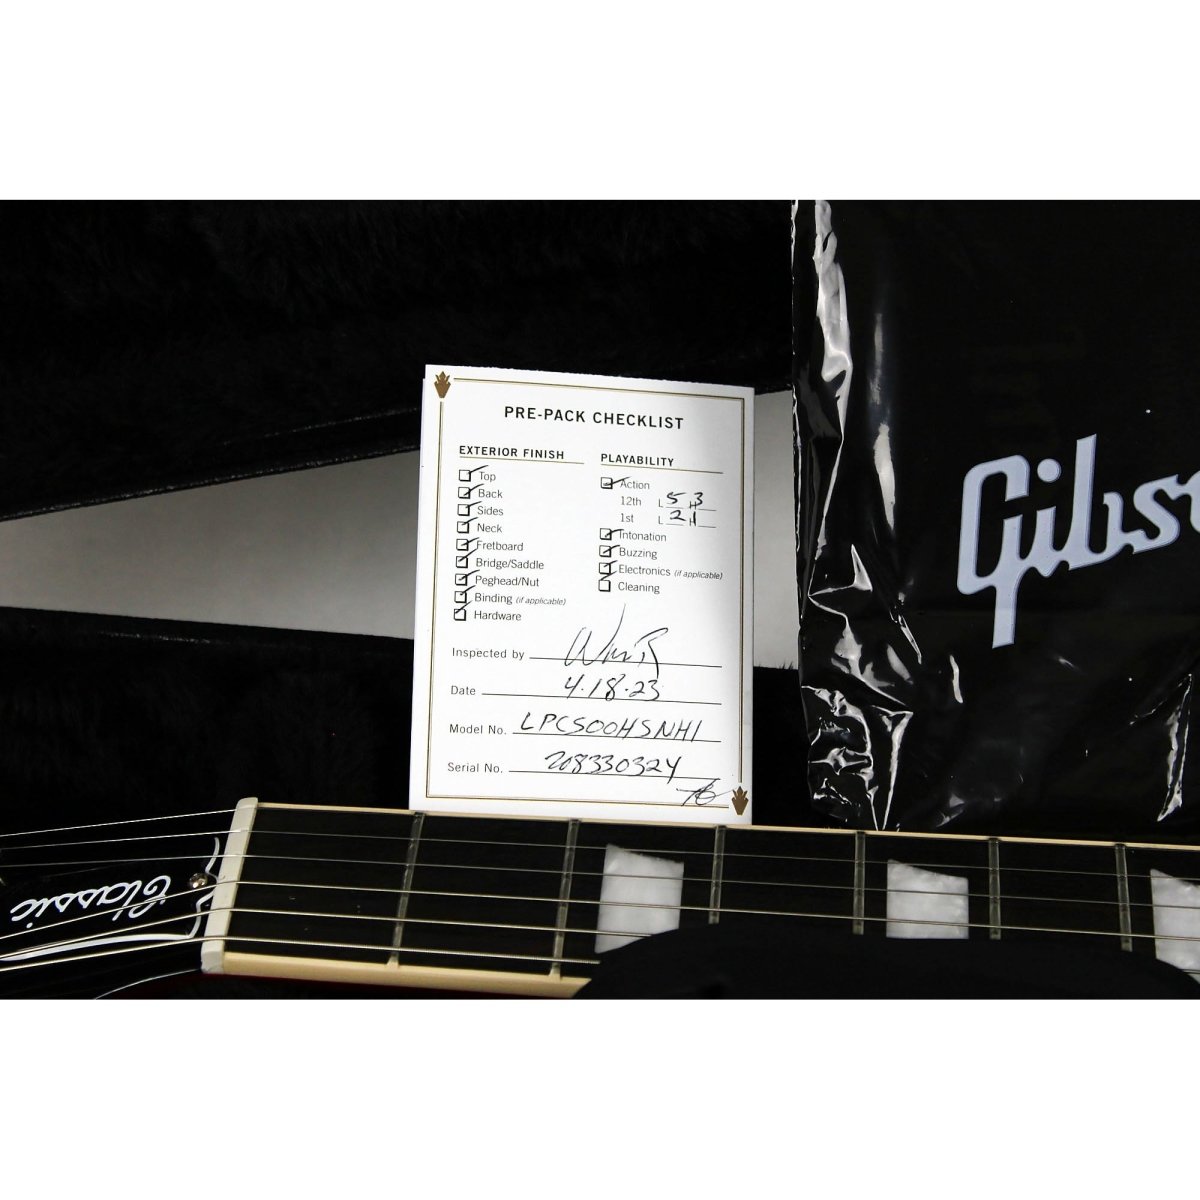 Gibson Les Paul Classic - Heritage Cherry Sunburst - Leitz Music-711106035765-LPCS00HSNH1